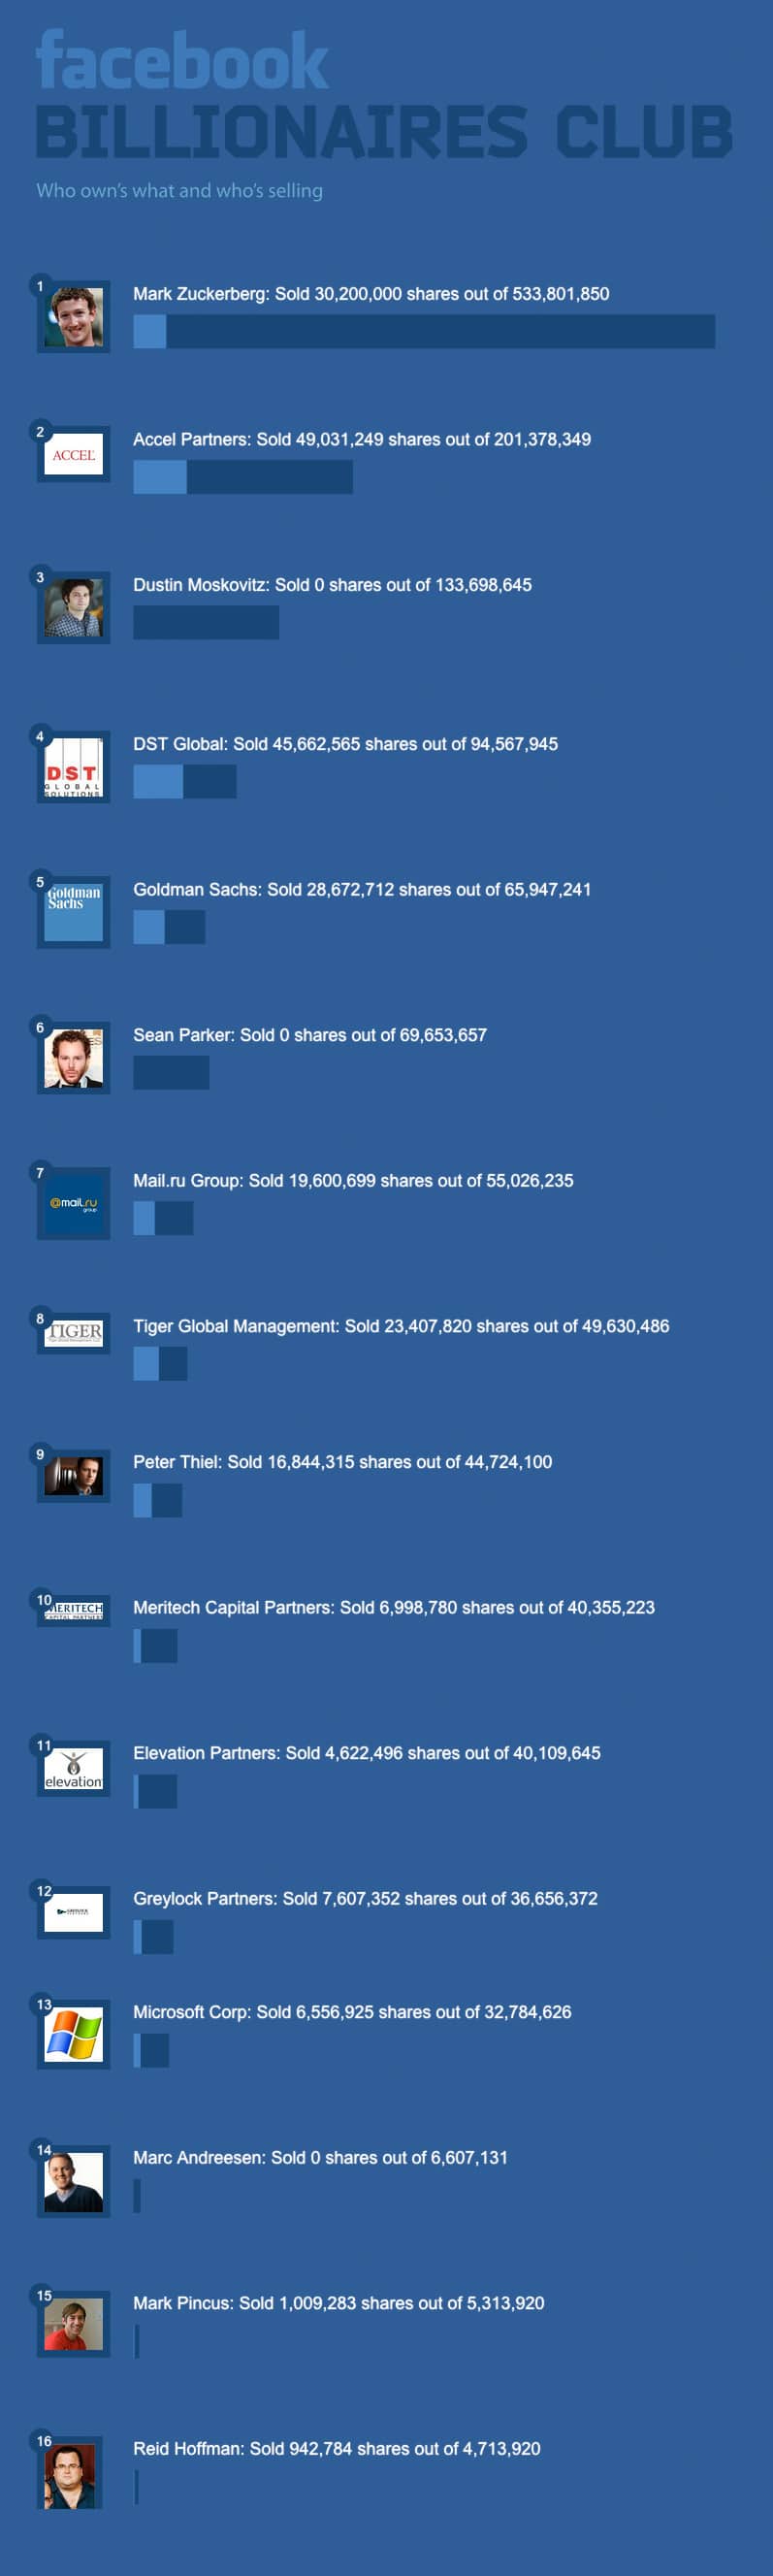 Facebook-Billionaires-Club-Stockholders-Infographic